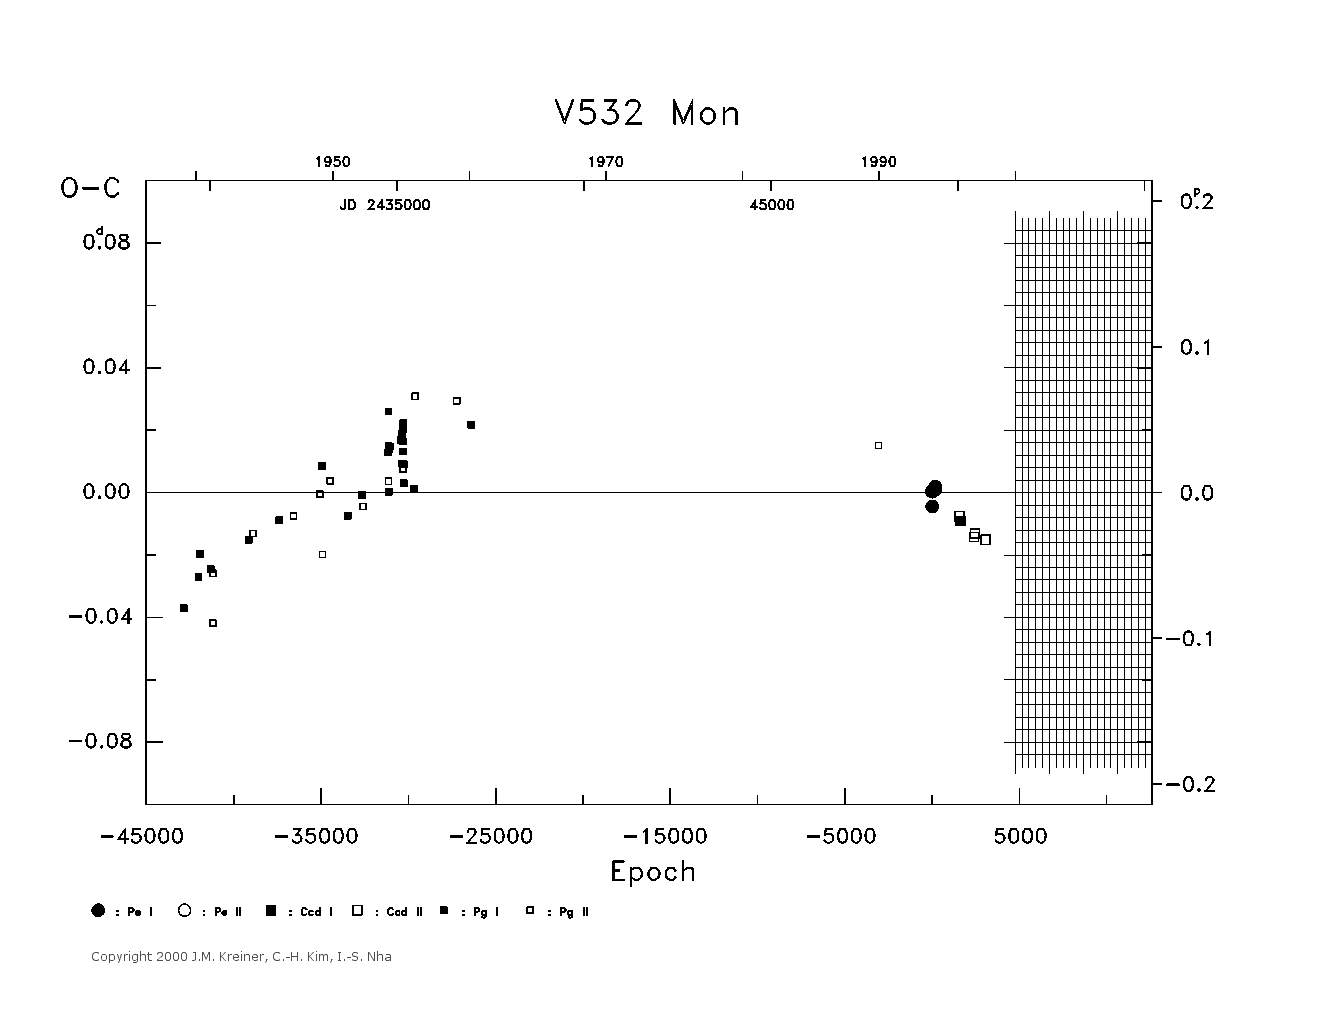 [IMAGE: large V532 MON O-C diagram]